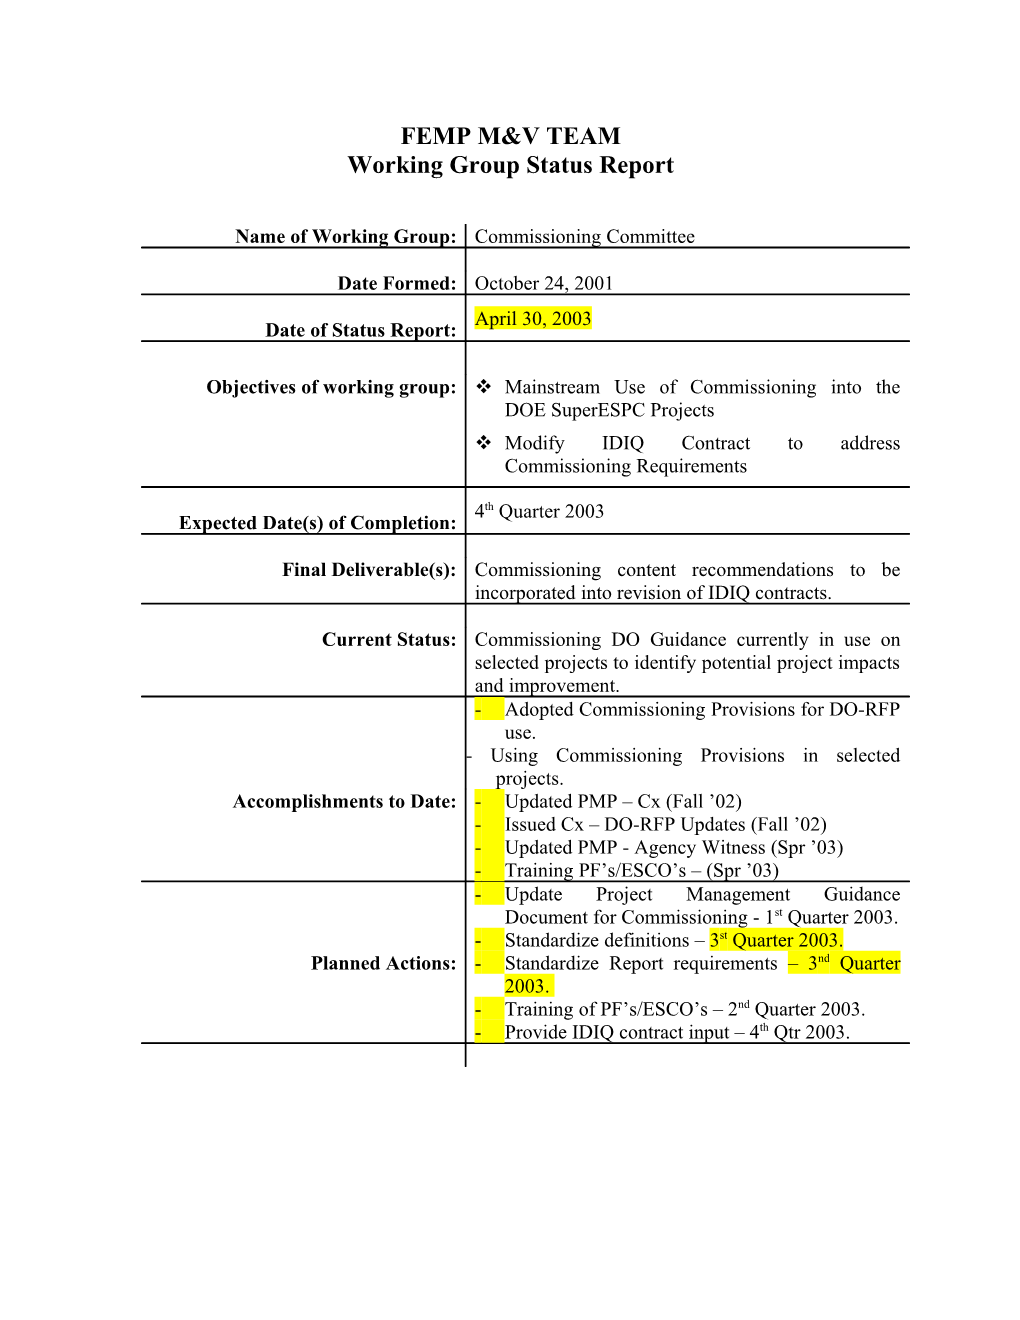 Working Group Status Report